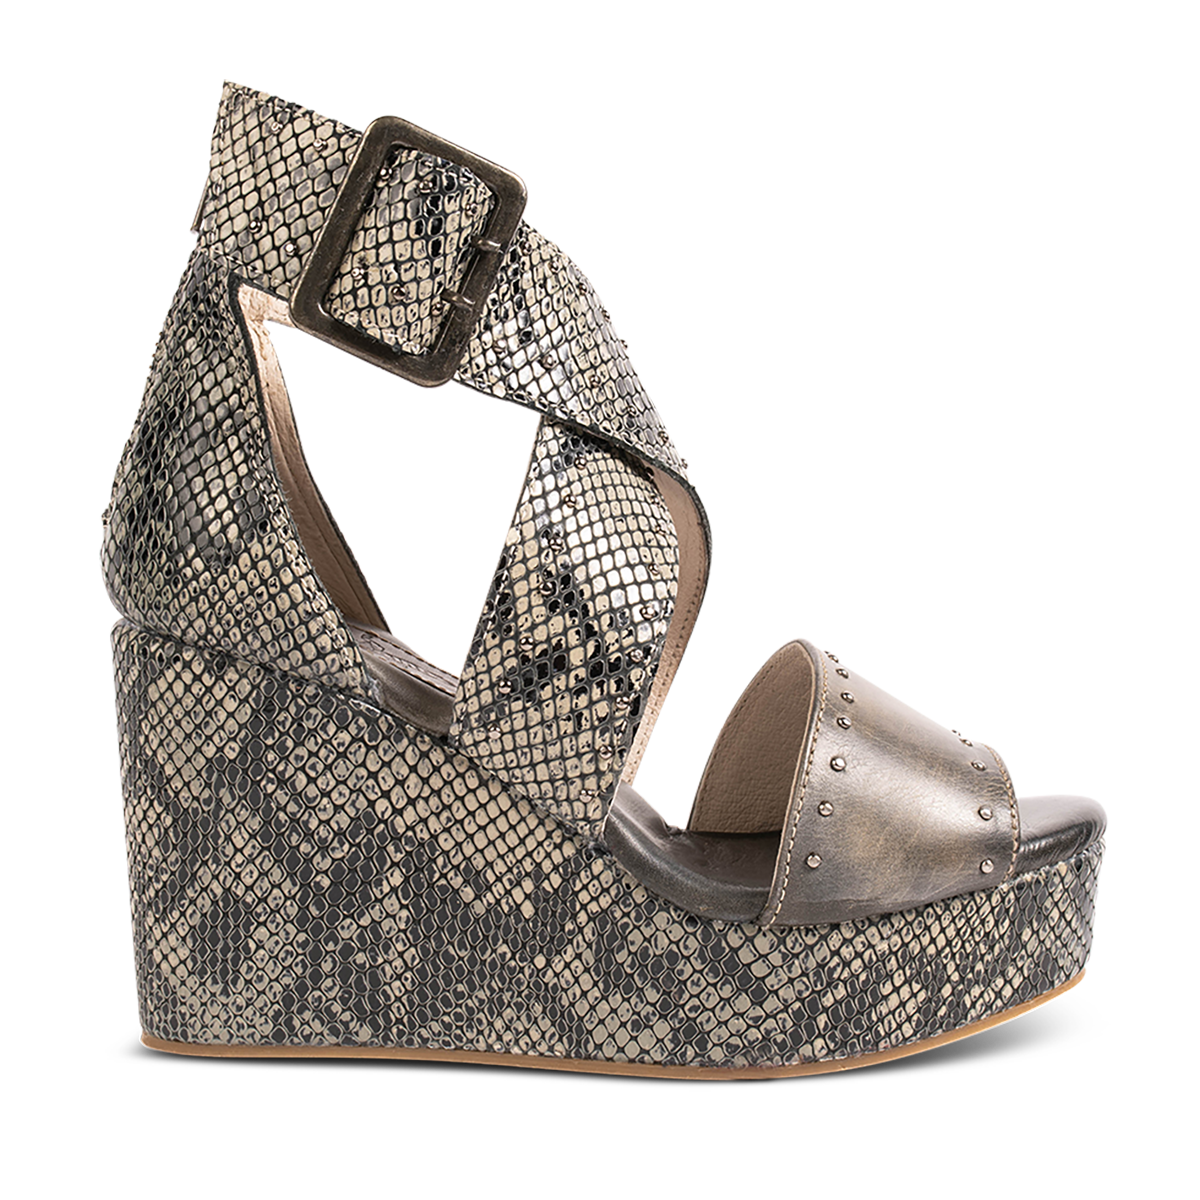 FREEBIRD women's Terra olive snake multi platform sandal with wedge heel, an adjustable ankle strap, and stud detailing